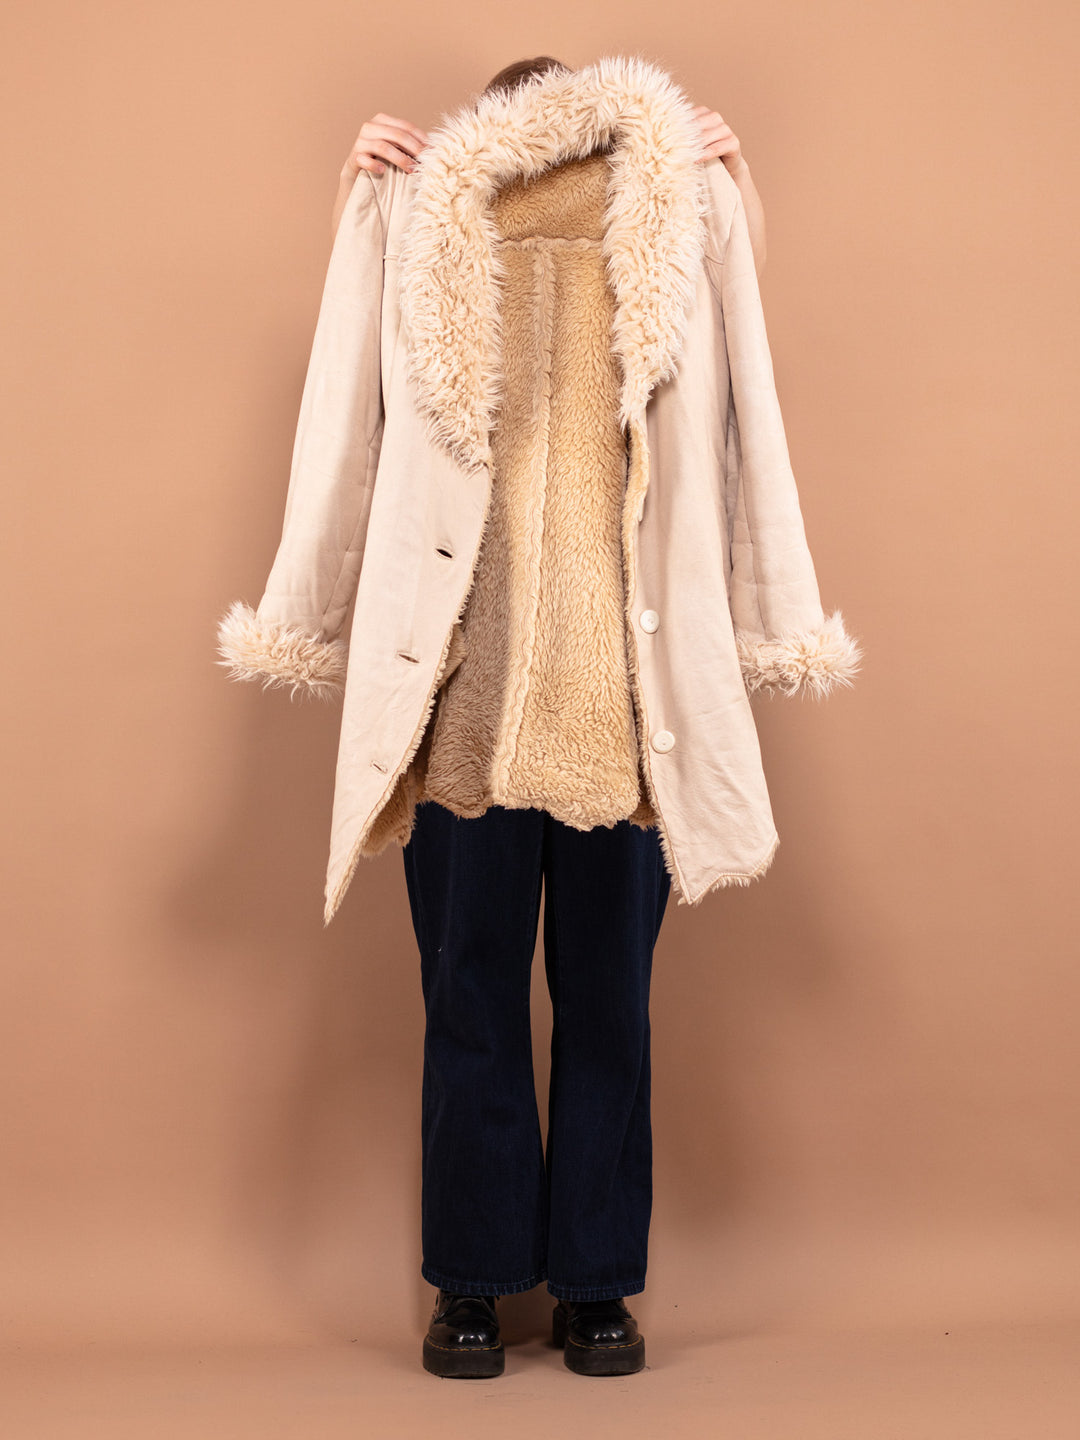 White Penny Lane Coat 90's, Size M Medium, Y2K Afghan Coat, Faux Fur Trim Sherpa Coat, Longline Boho Jacket, White Outerwear, Hippie Clothes